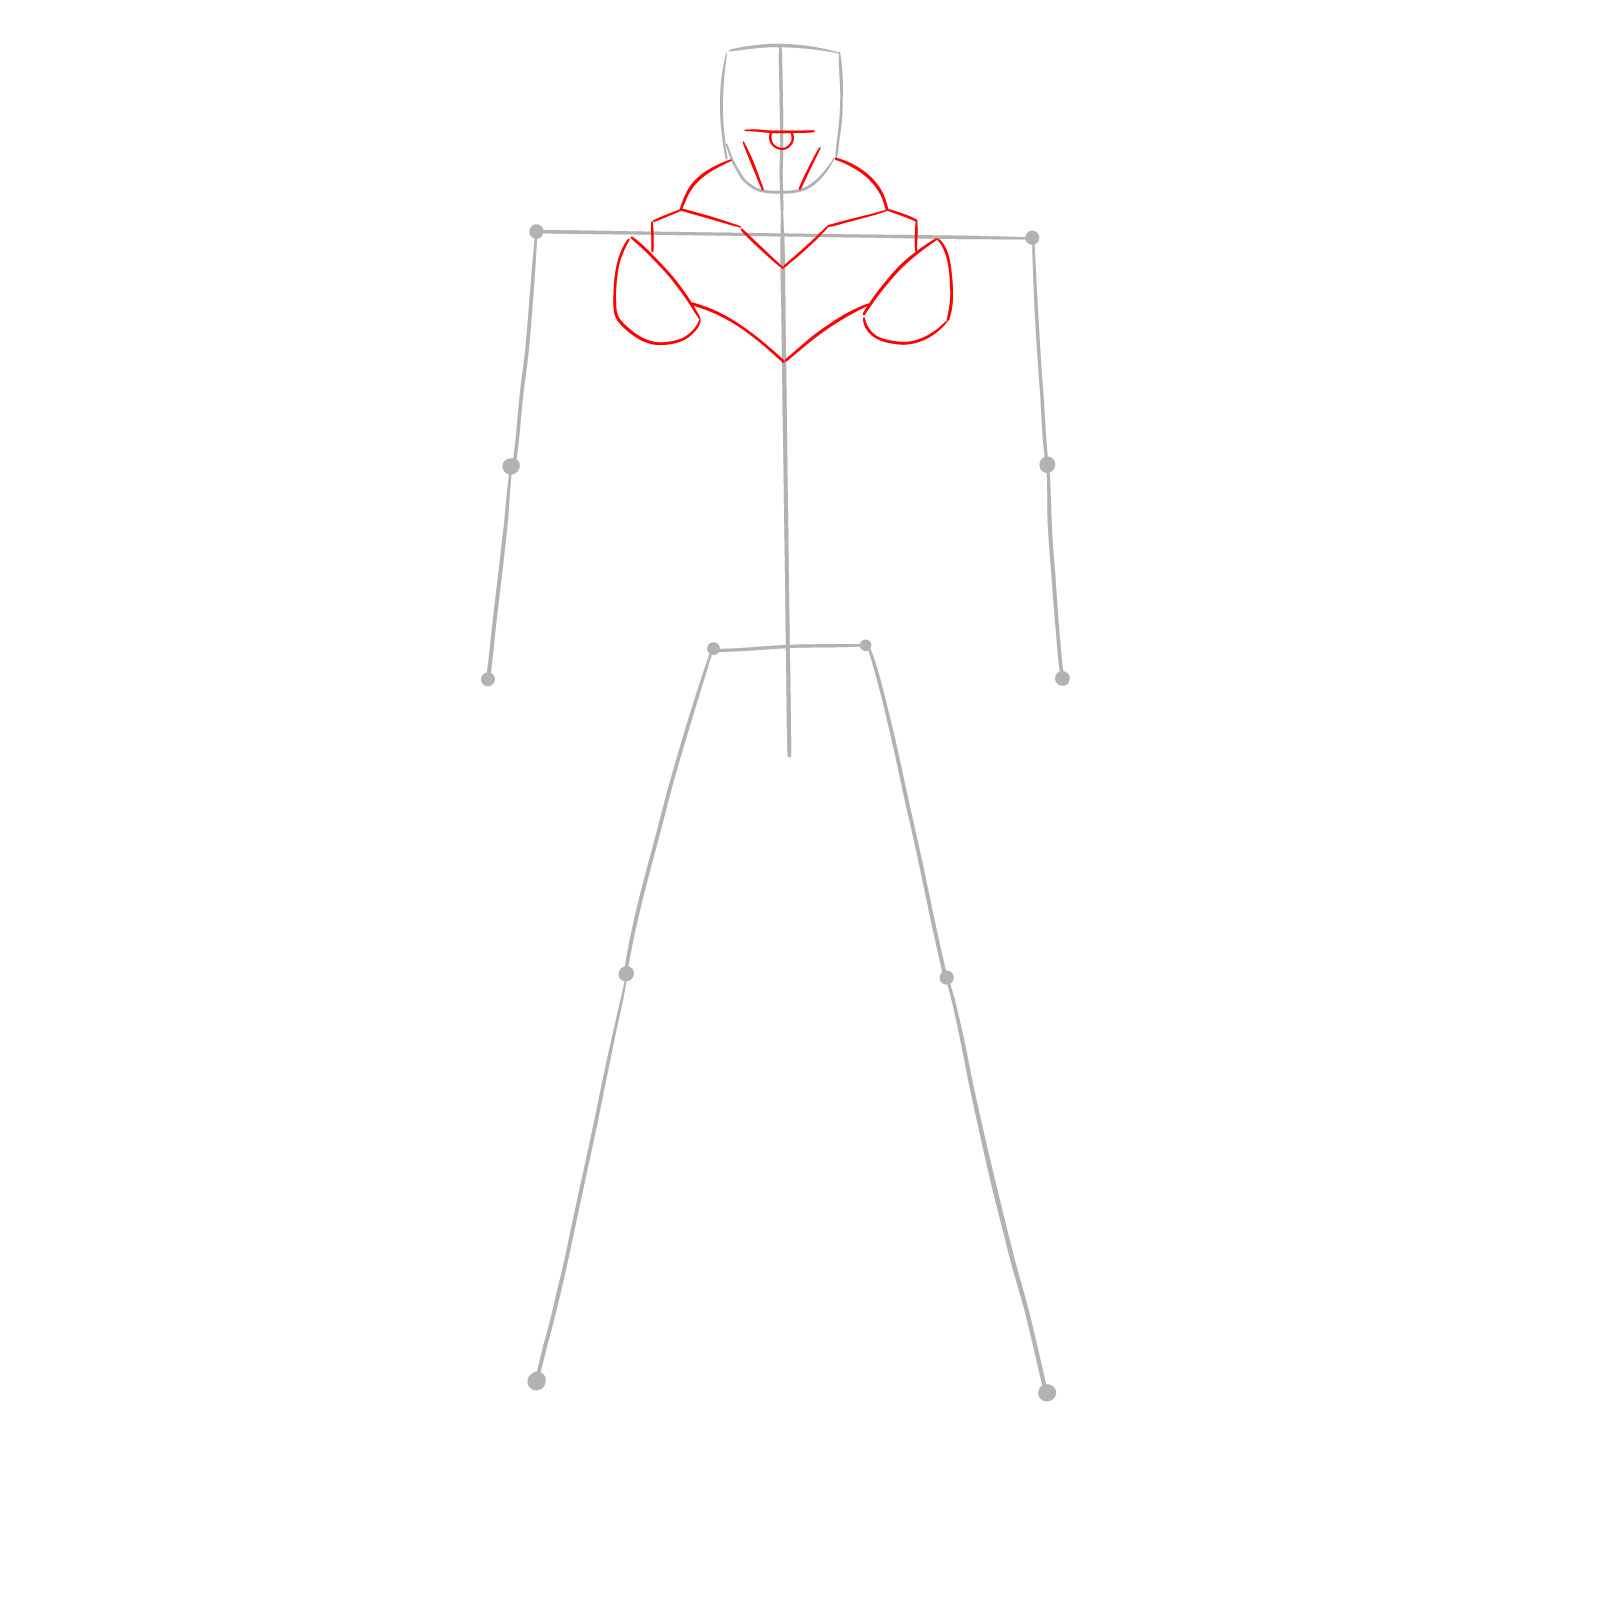 How to Draw Evangelion Unit-00 (EVA-00) - step 02